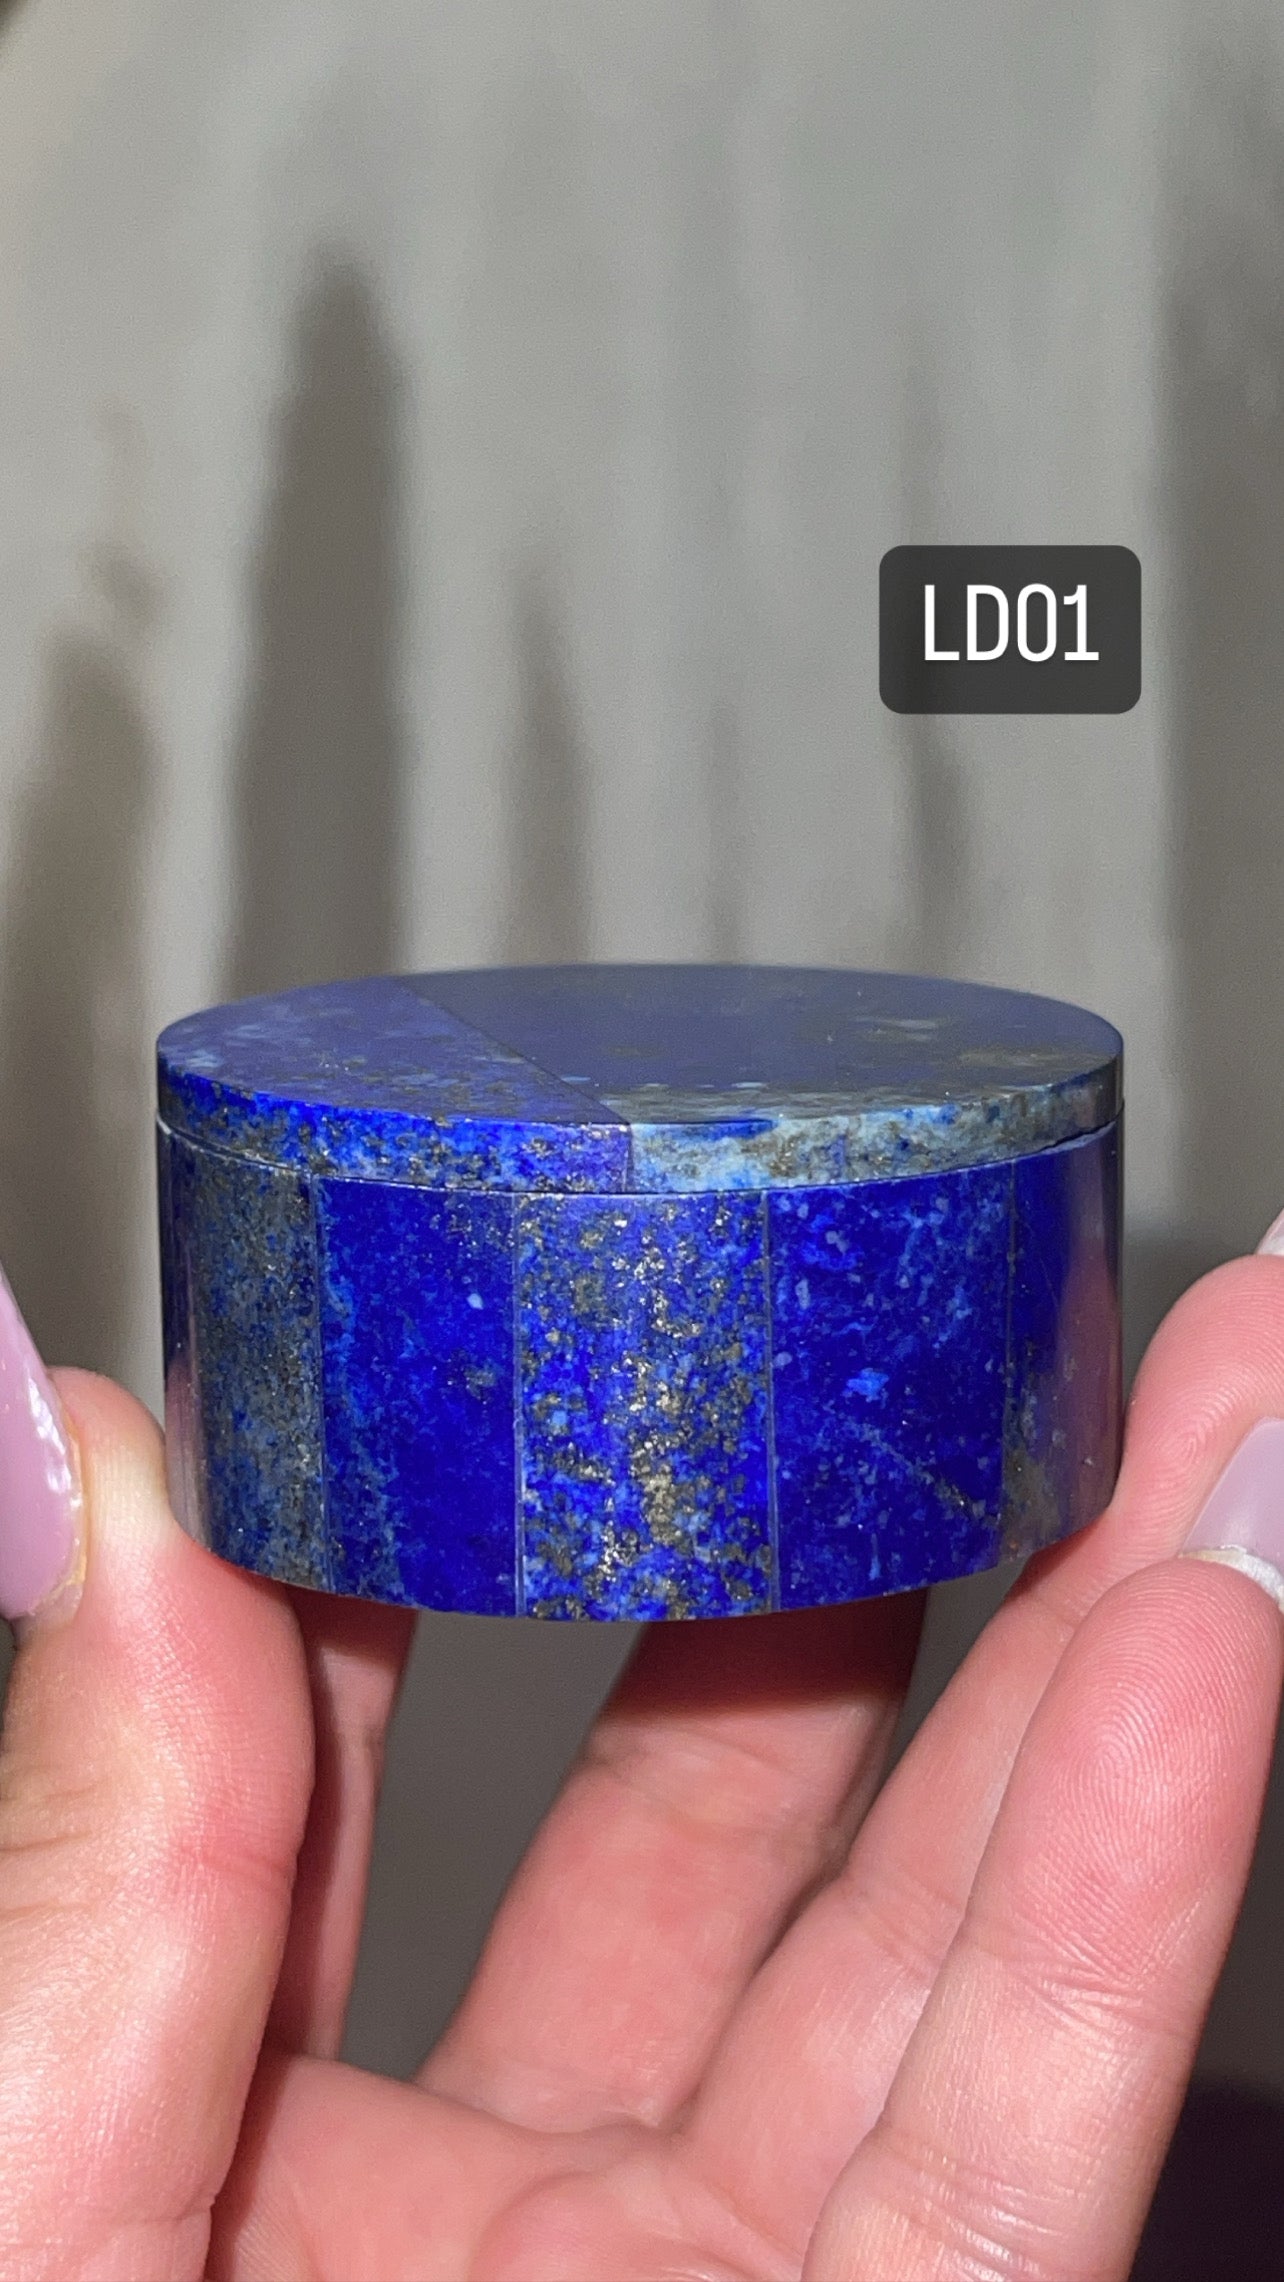 Lapis Lazuli Box